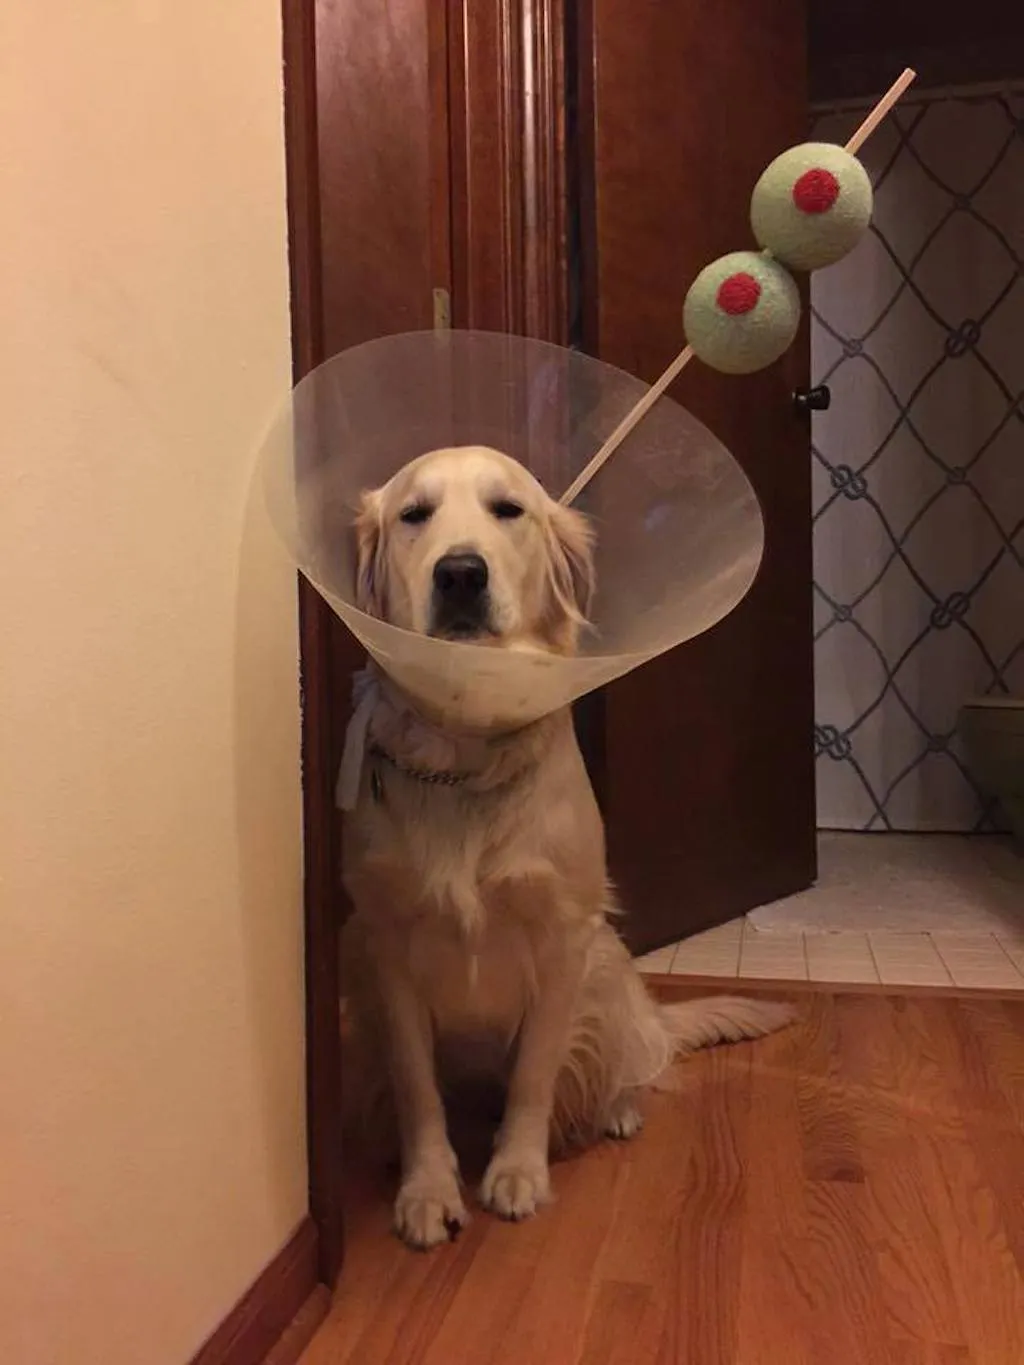 cone of shame costume, martini glass using cone of dog